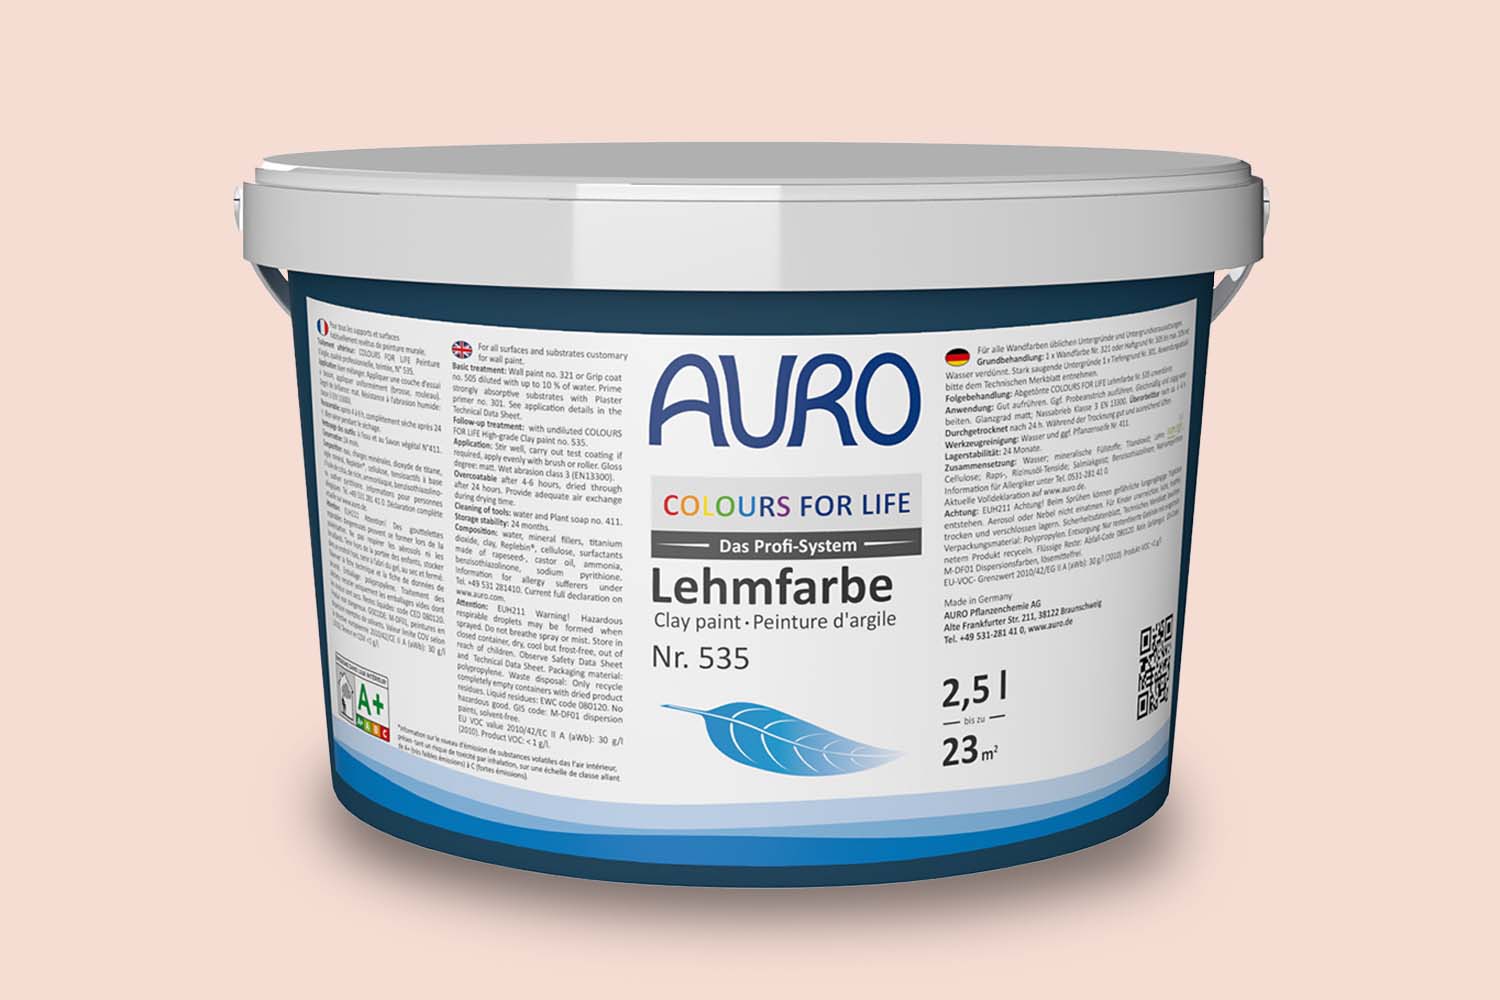 Auro Profi-Lehmfarbe Nr. 535 rose quartz Colours For Life